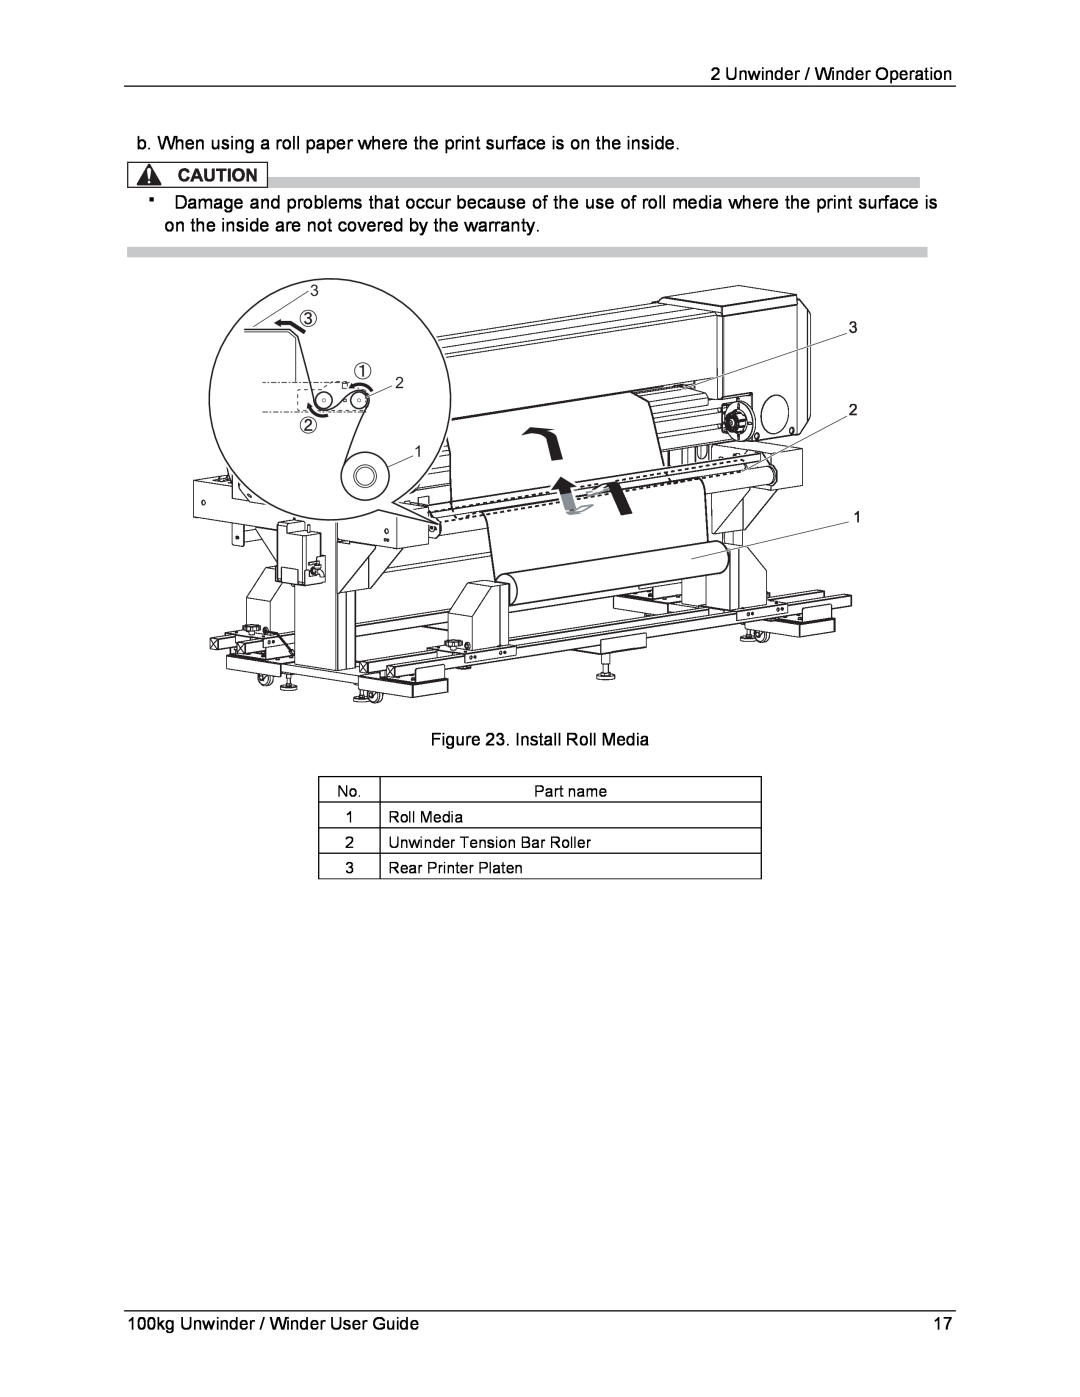 Xerox 8254E, 8264E manual Unwinder / Winder Operation, Install Roll Media, 100kg Unwinder / Winder User Guide 